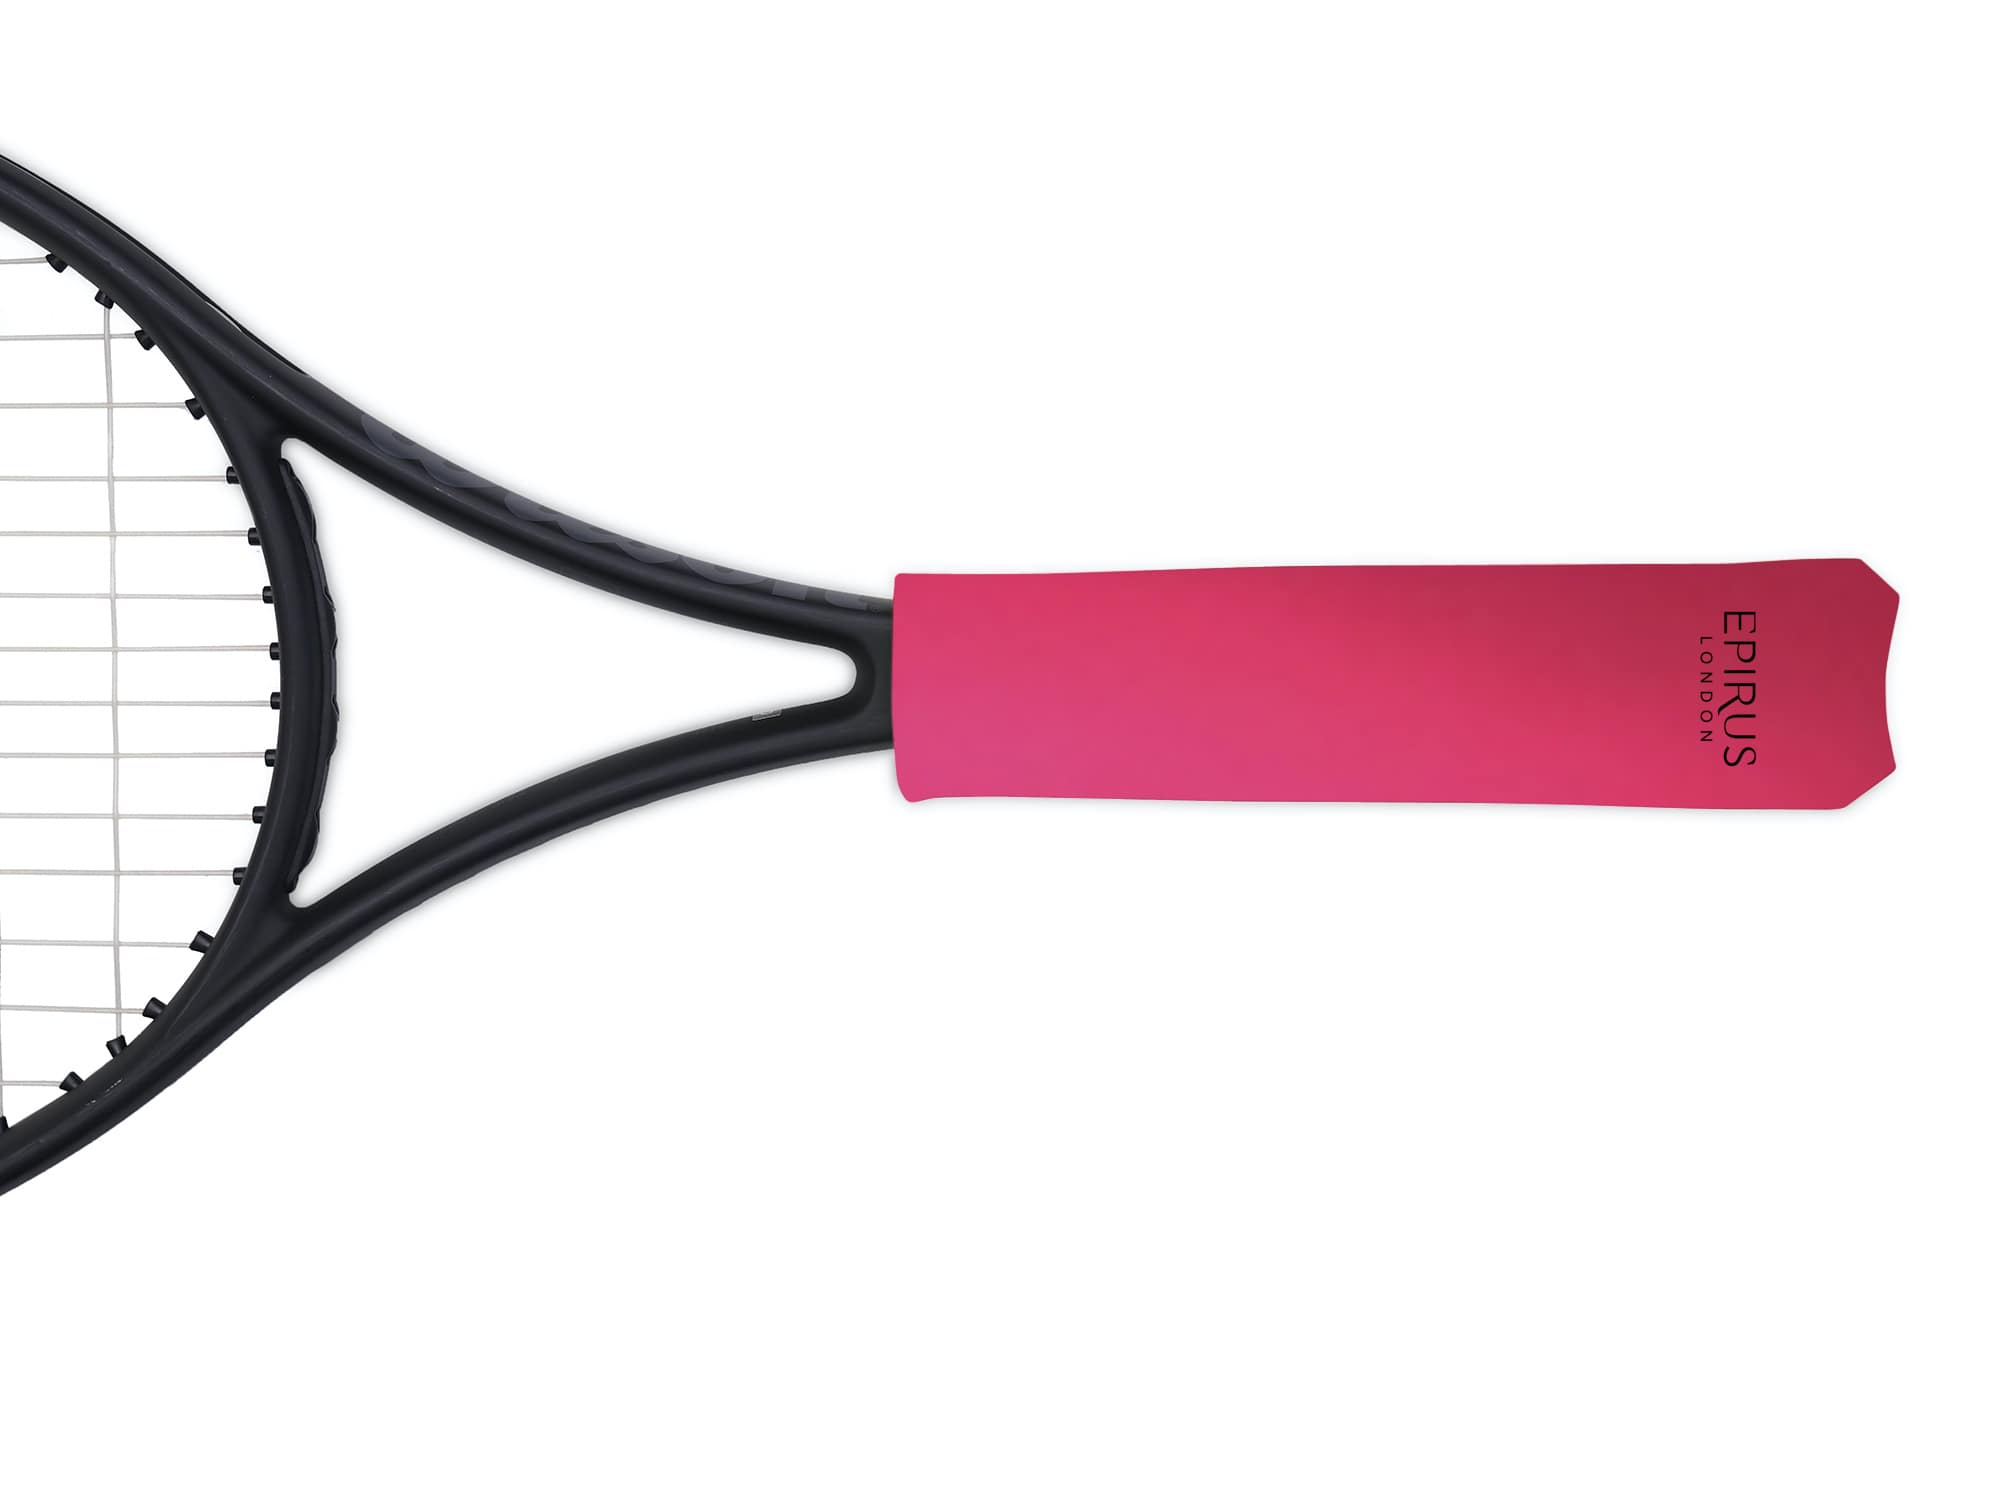 Epirus Neoprene Grip Cover (Neon Pink) keeps your tennis grips dry